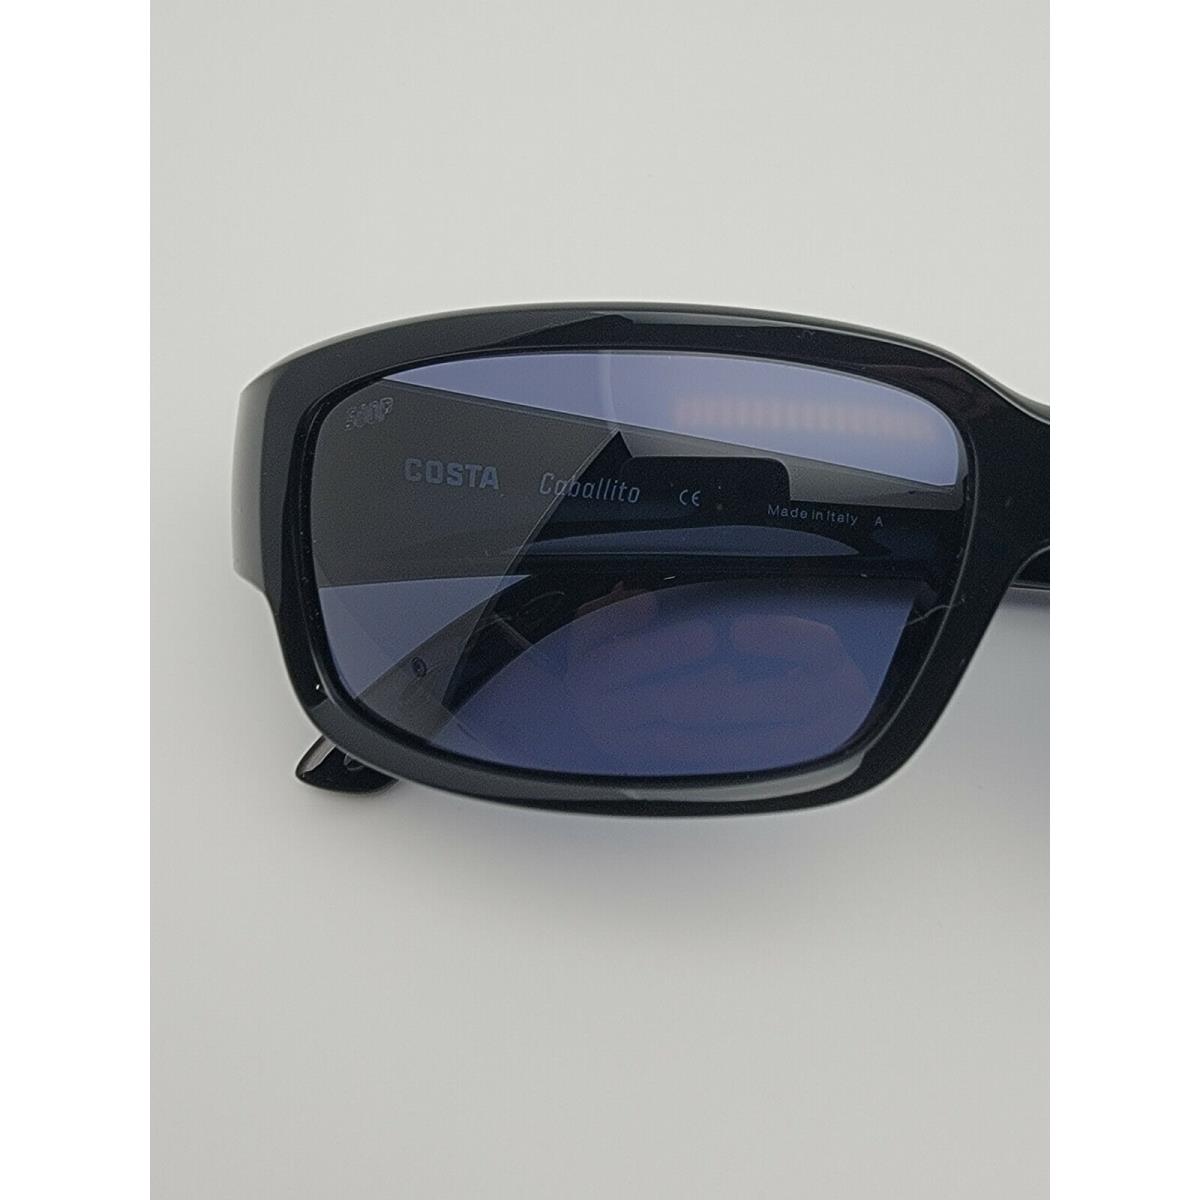 Costa Del Mar sunglasses Caballito - Frame: Black, Lens: Gray 8